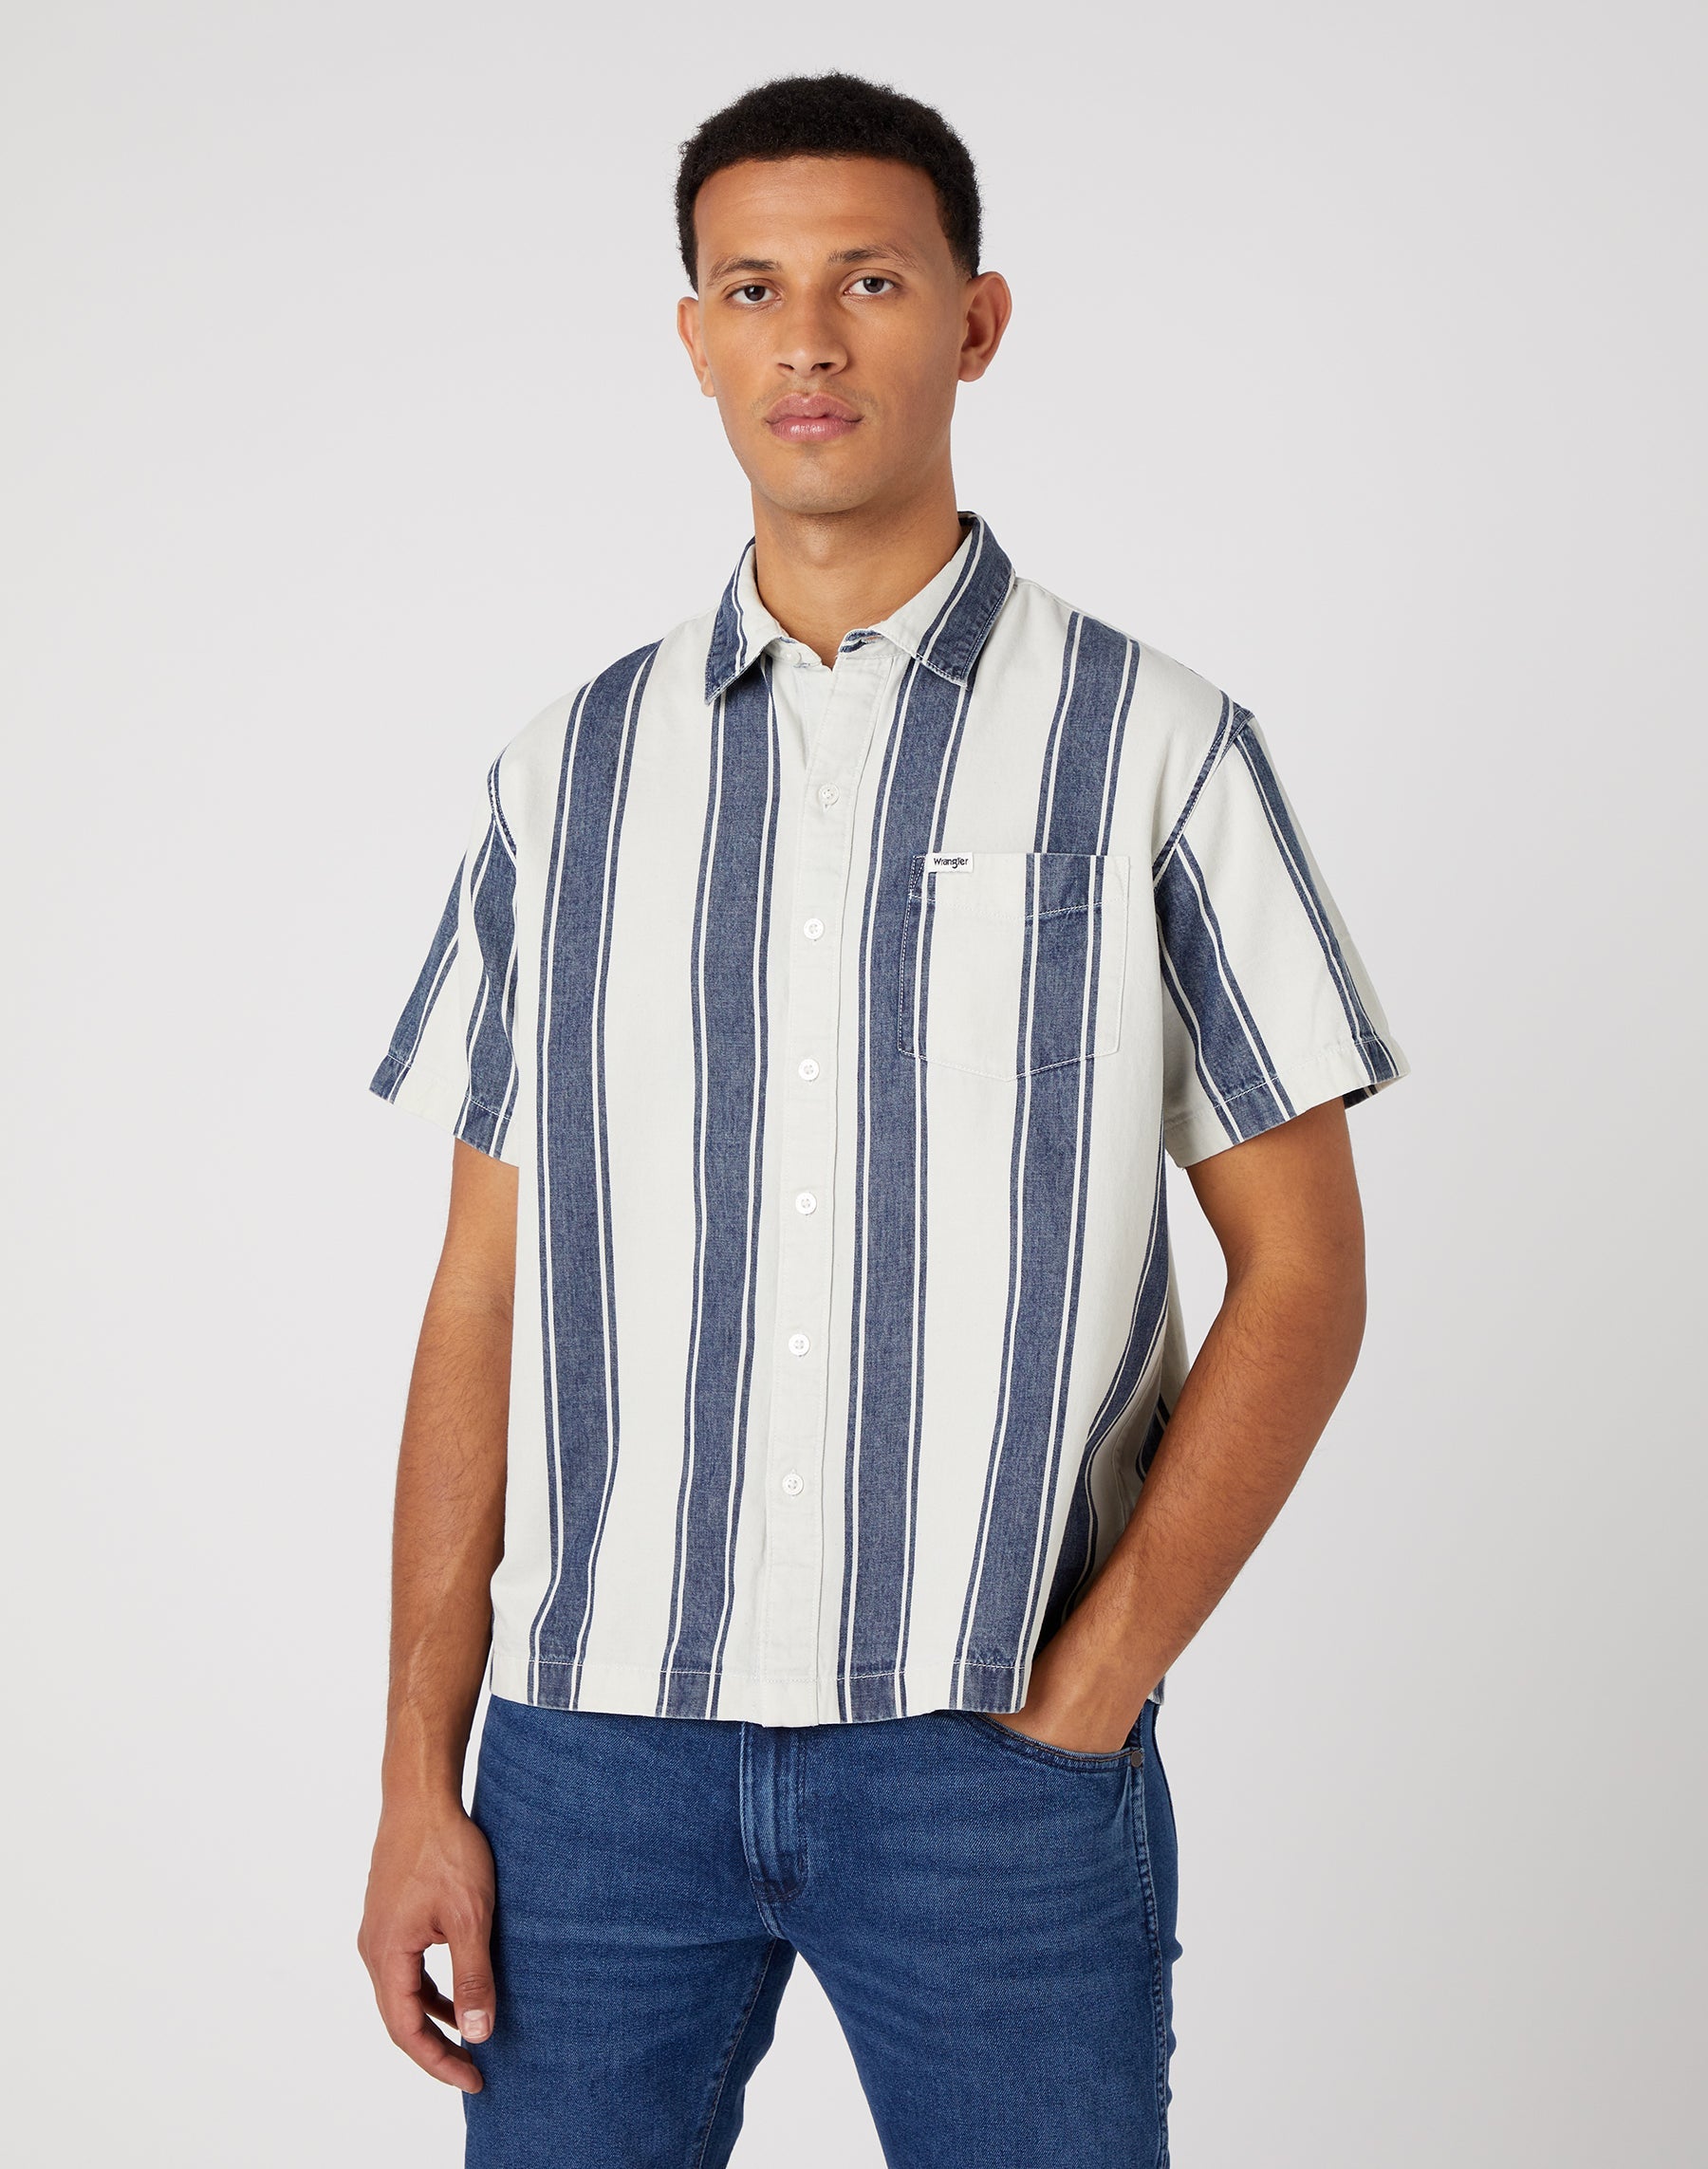 Kurzarm One Pocket Shirt in Light Indigo Hemden Wrangler   